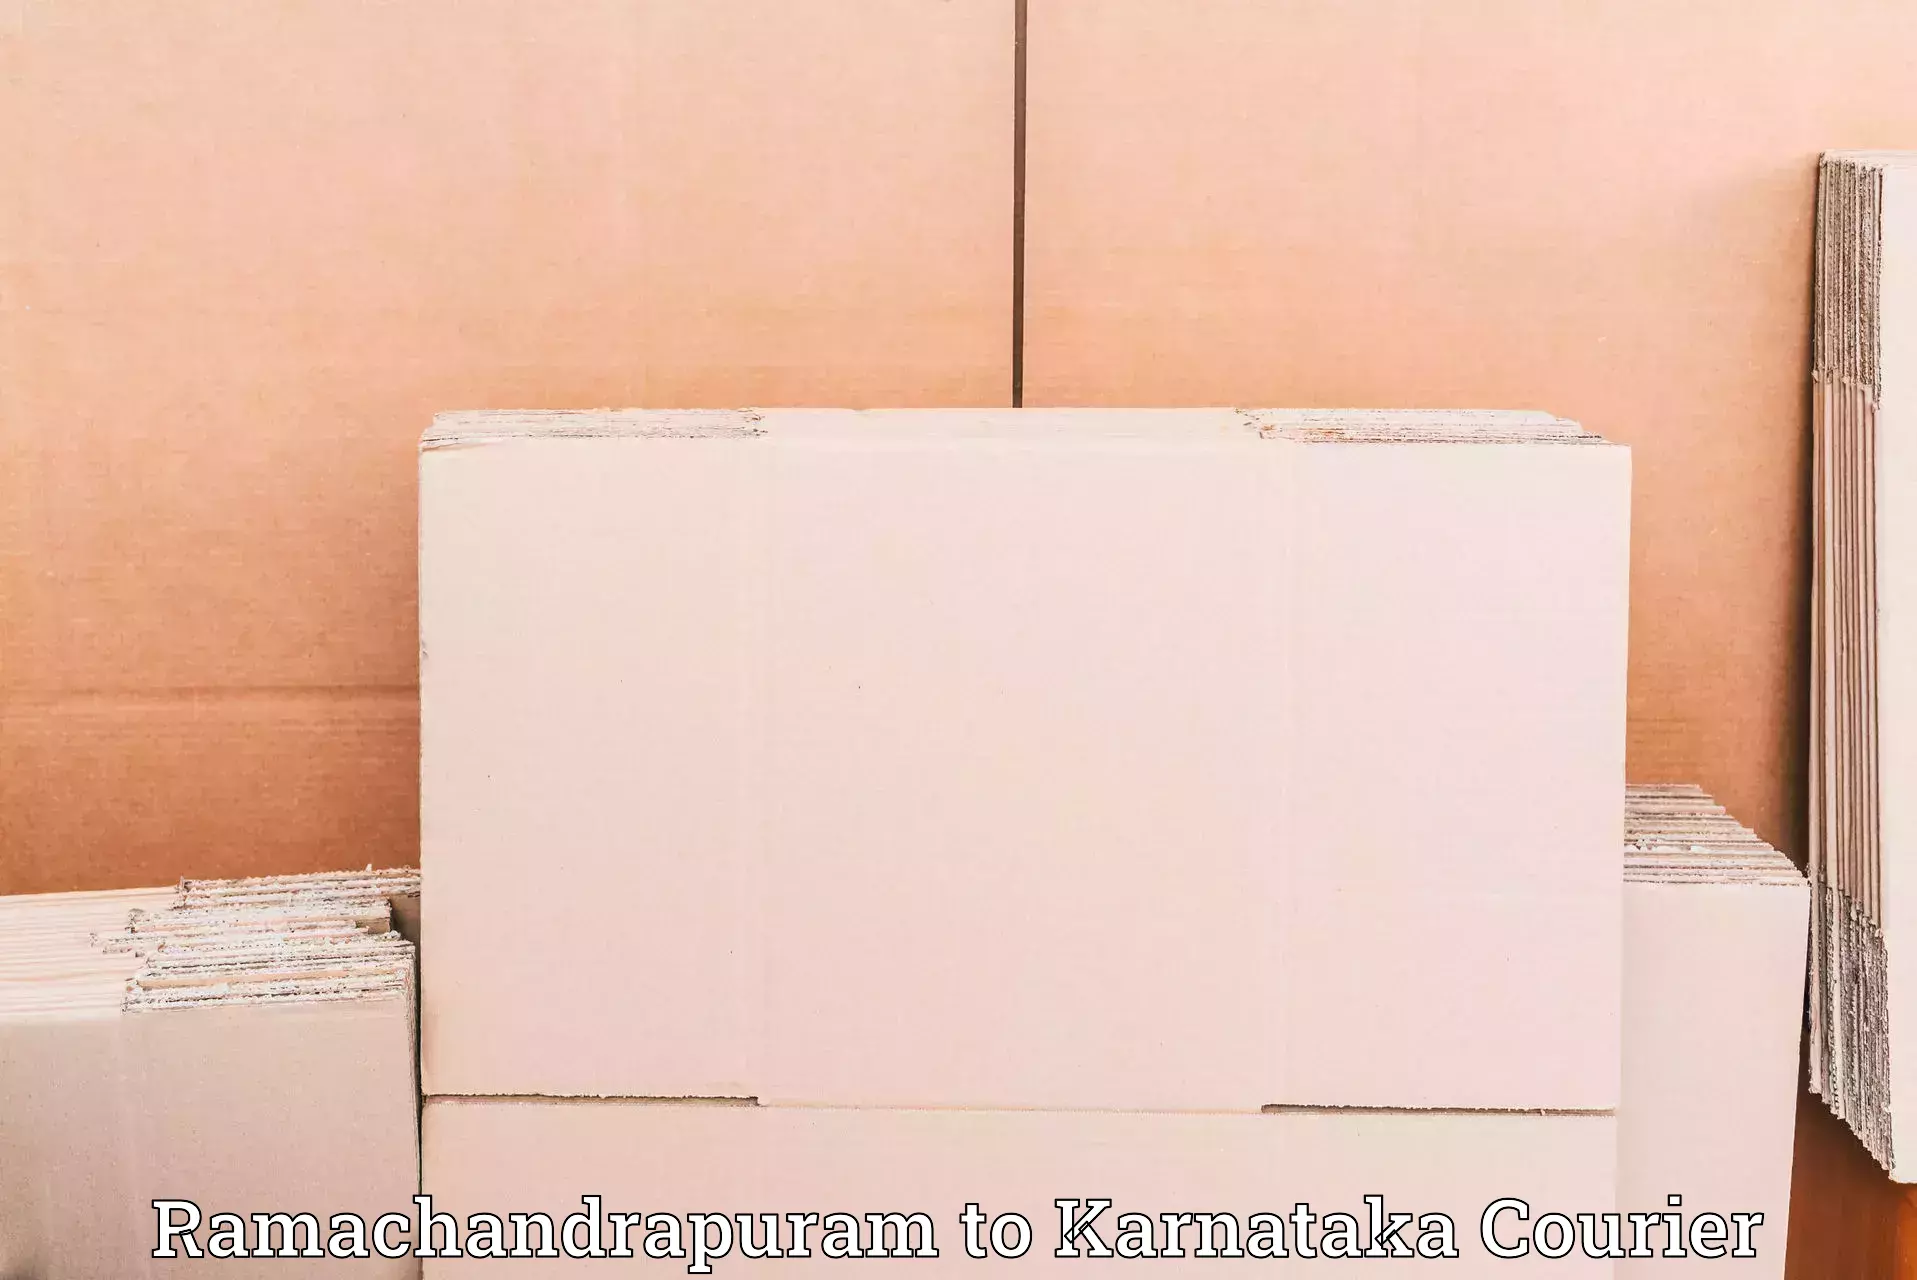 Courier service comparison Ramachandrapuram to Kollegal